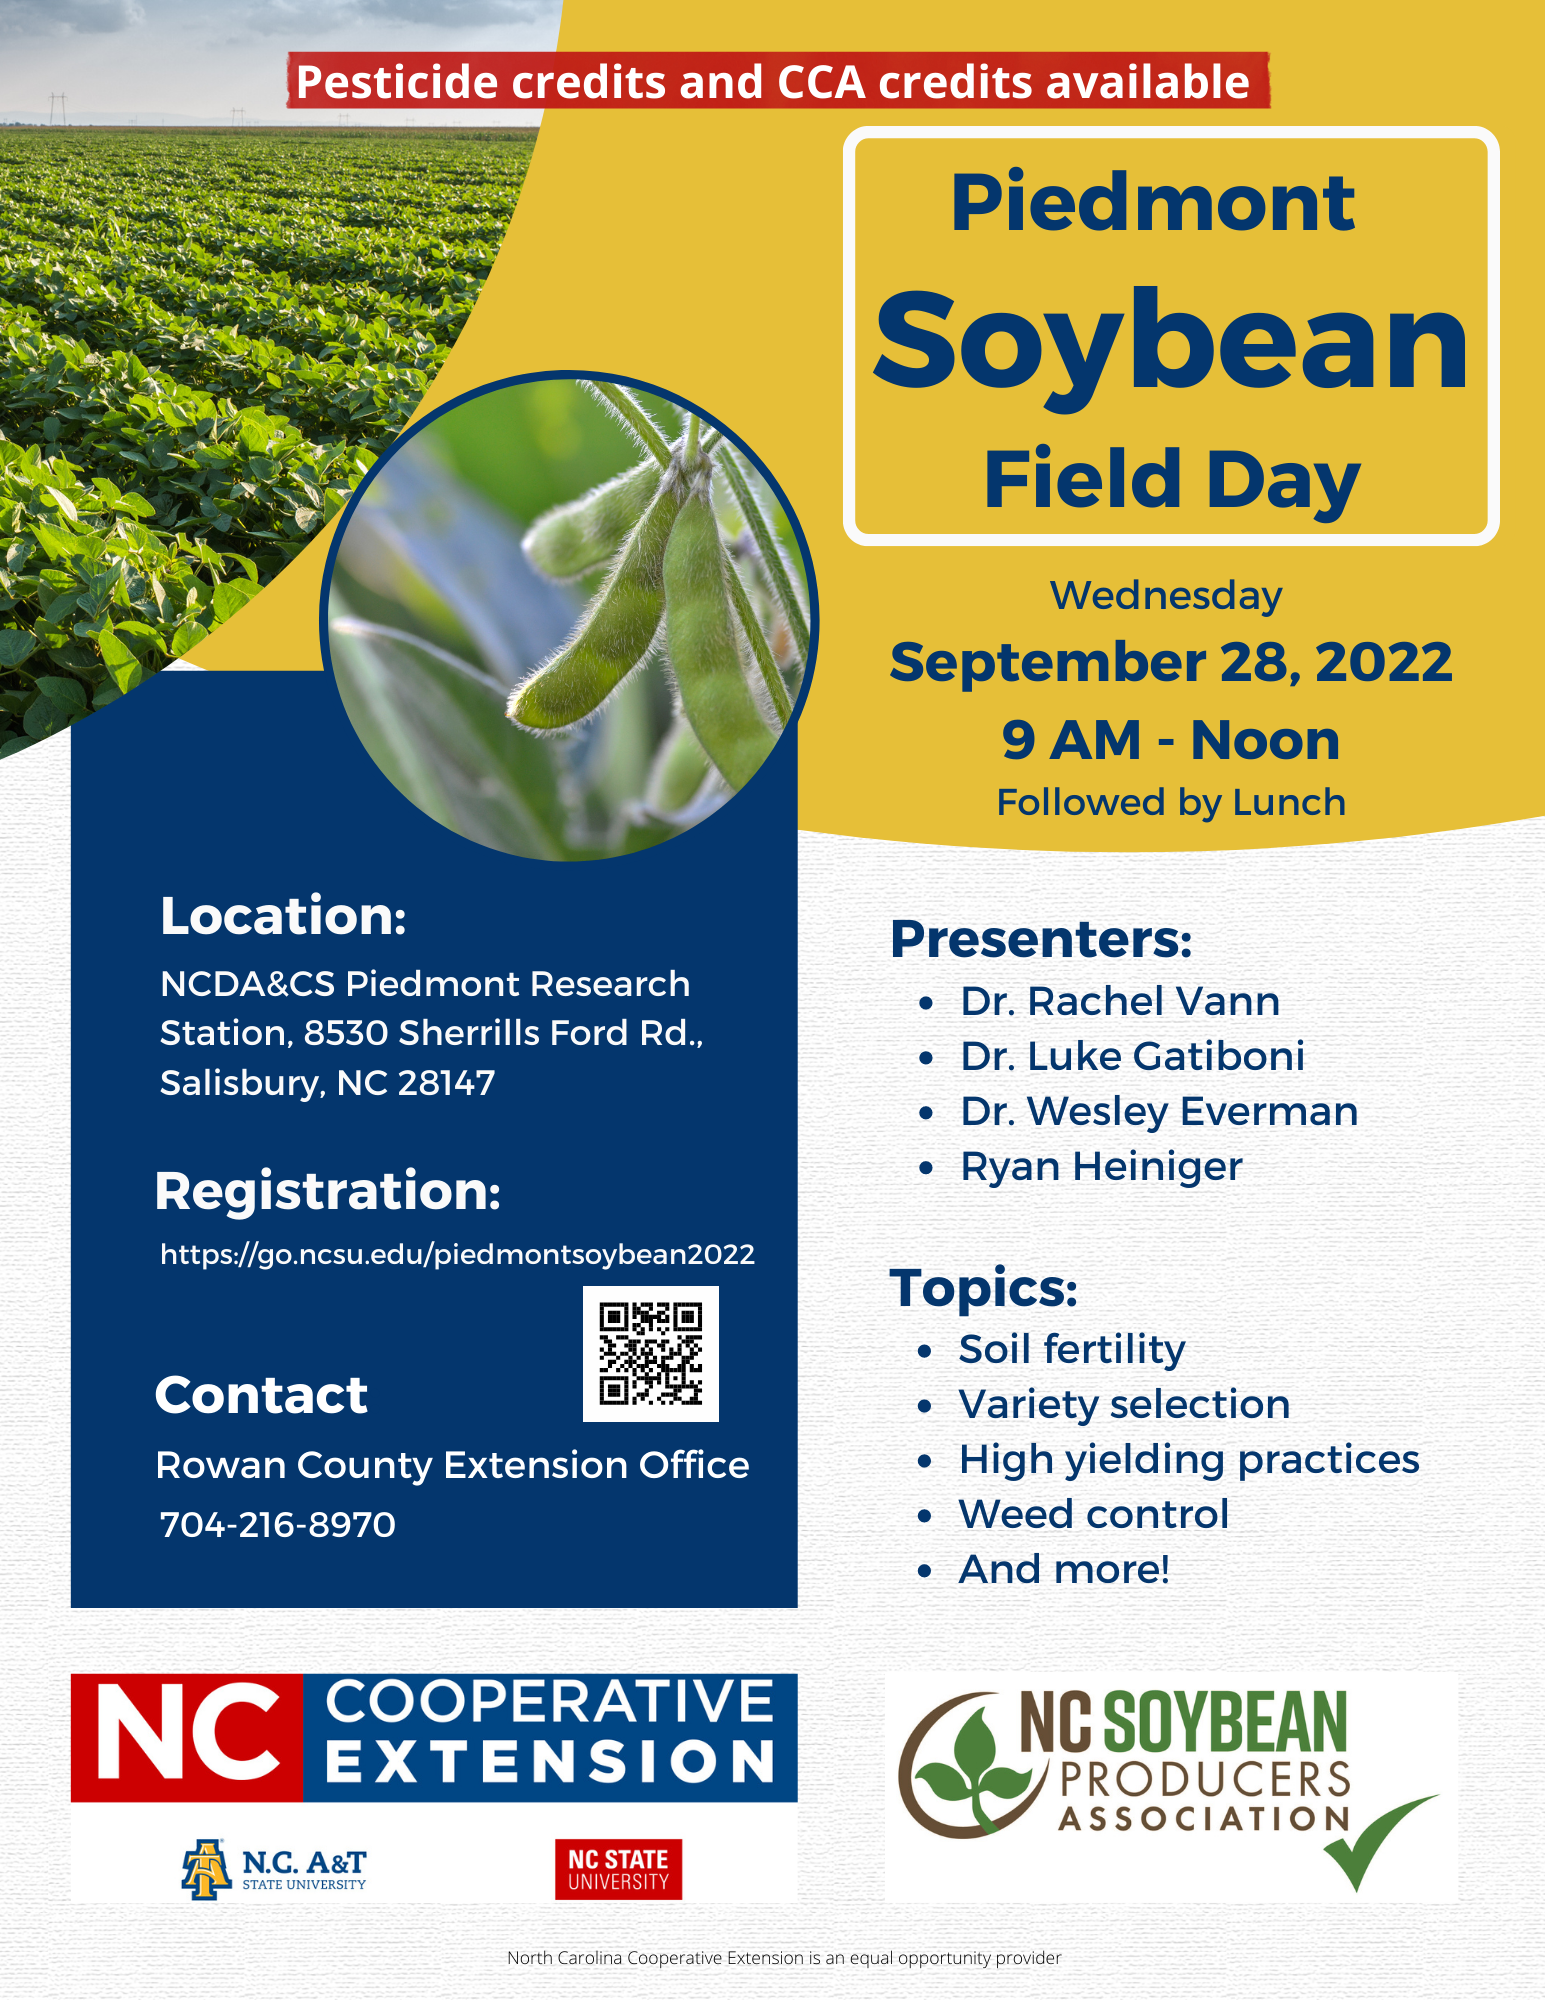 Piedmont Soybean Field Day. Wednesday September 28, 2022. 